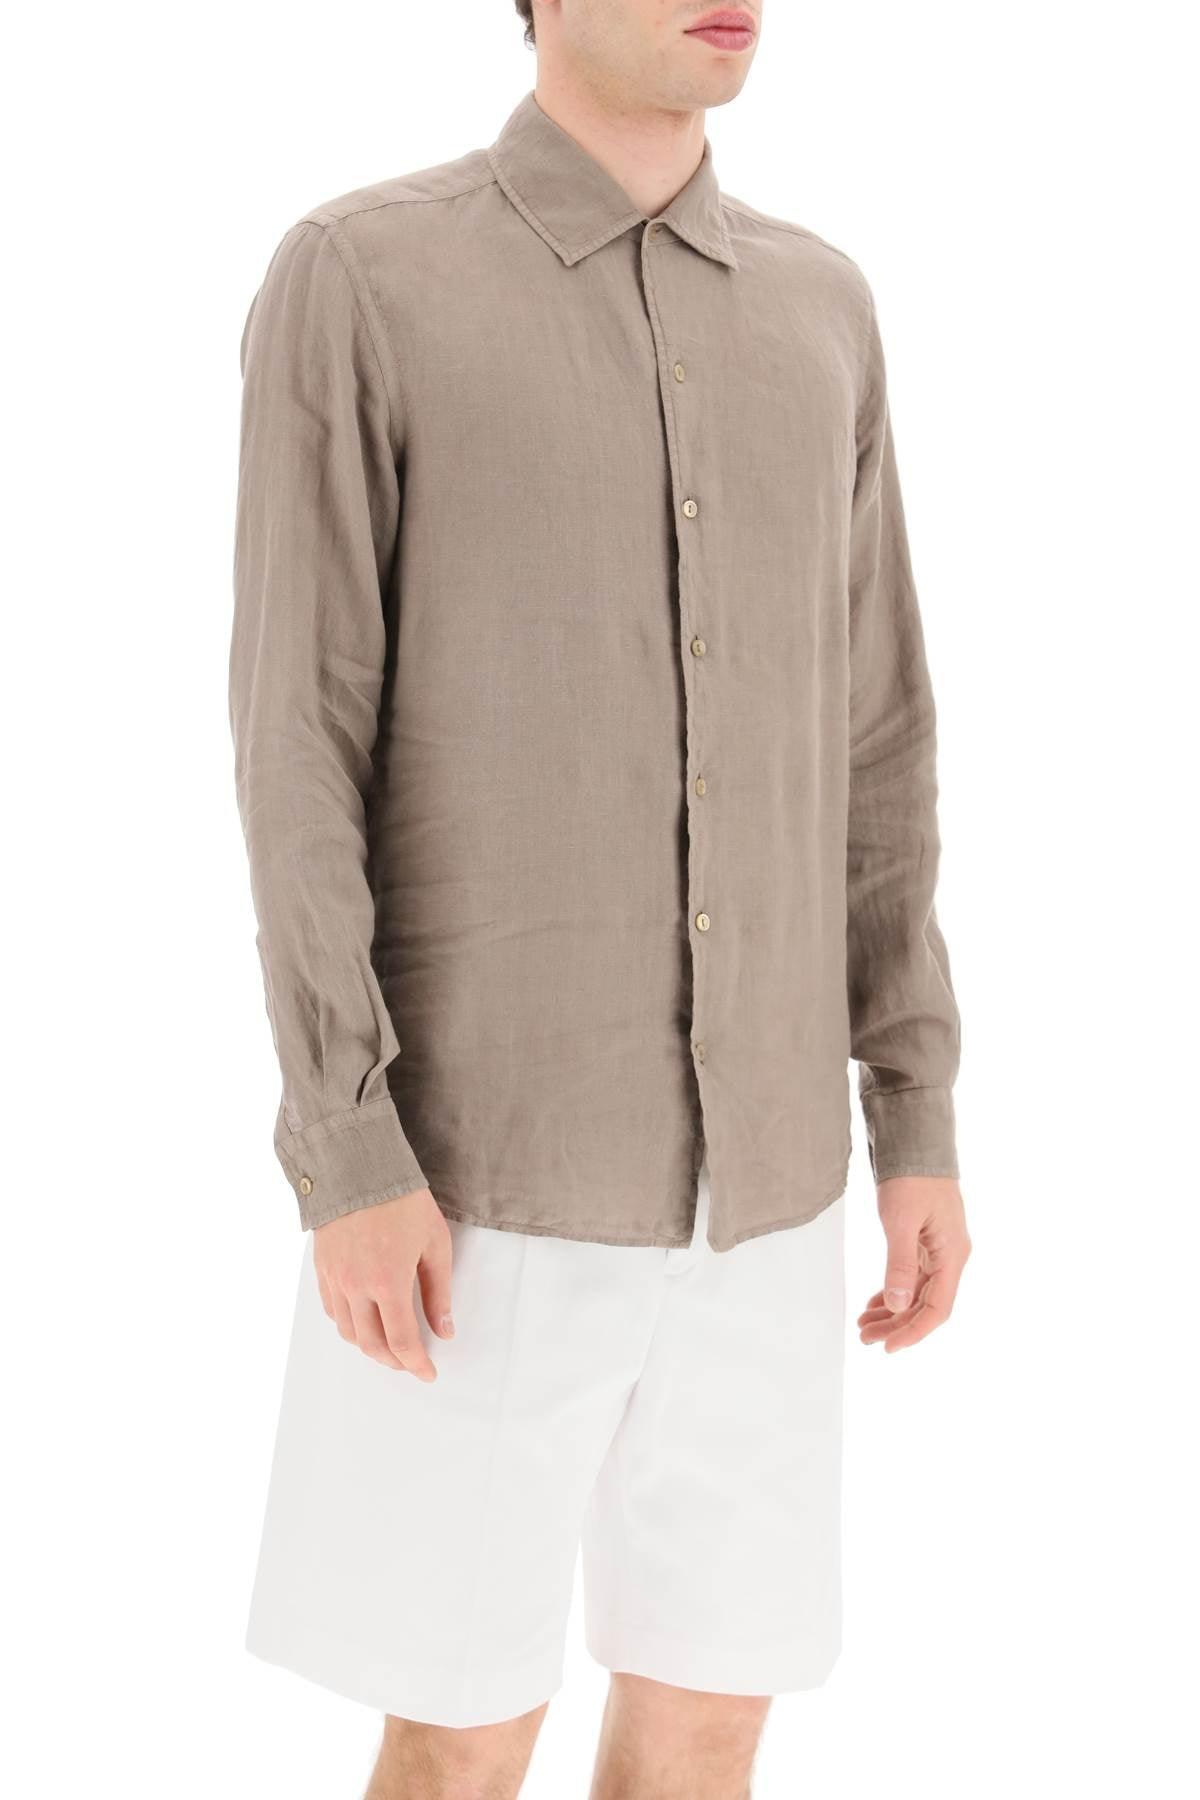 Agnona Classic Linen Shirt - JOHN JULIA